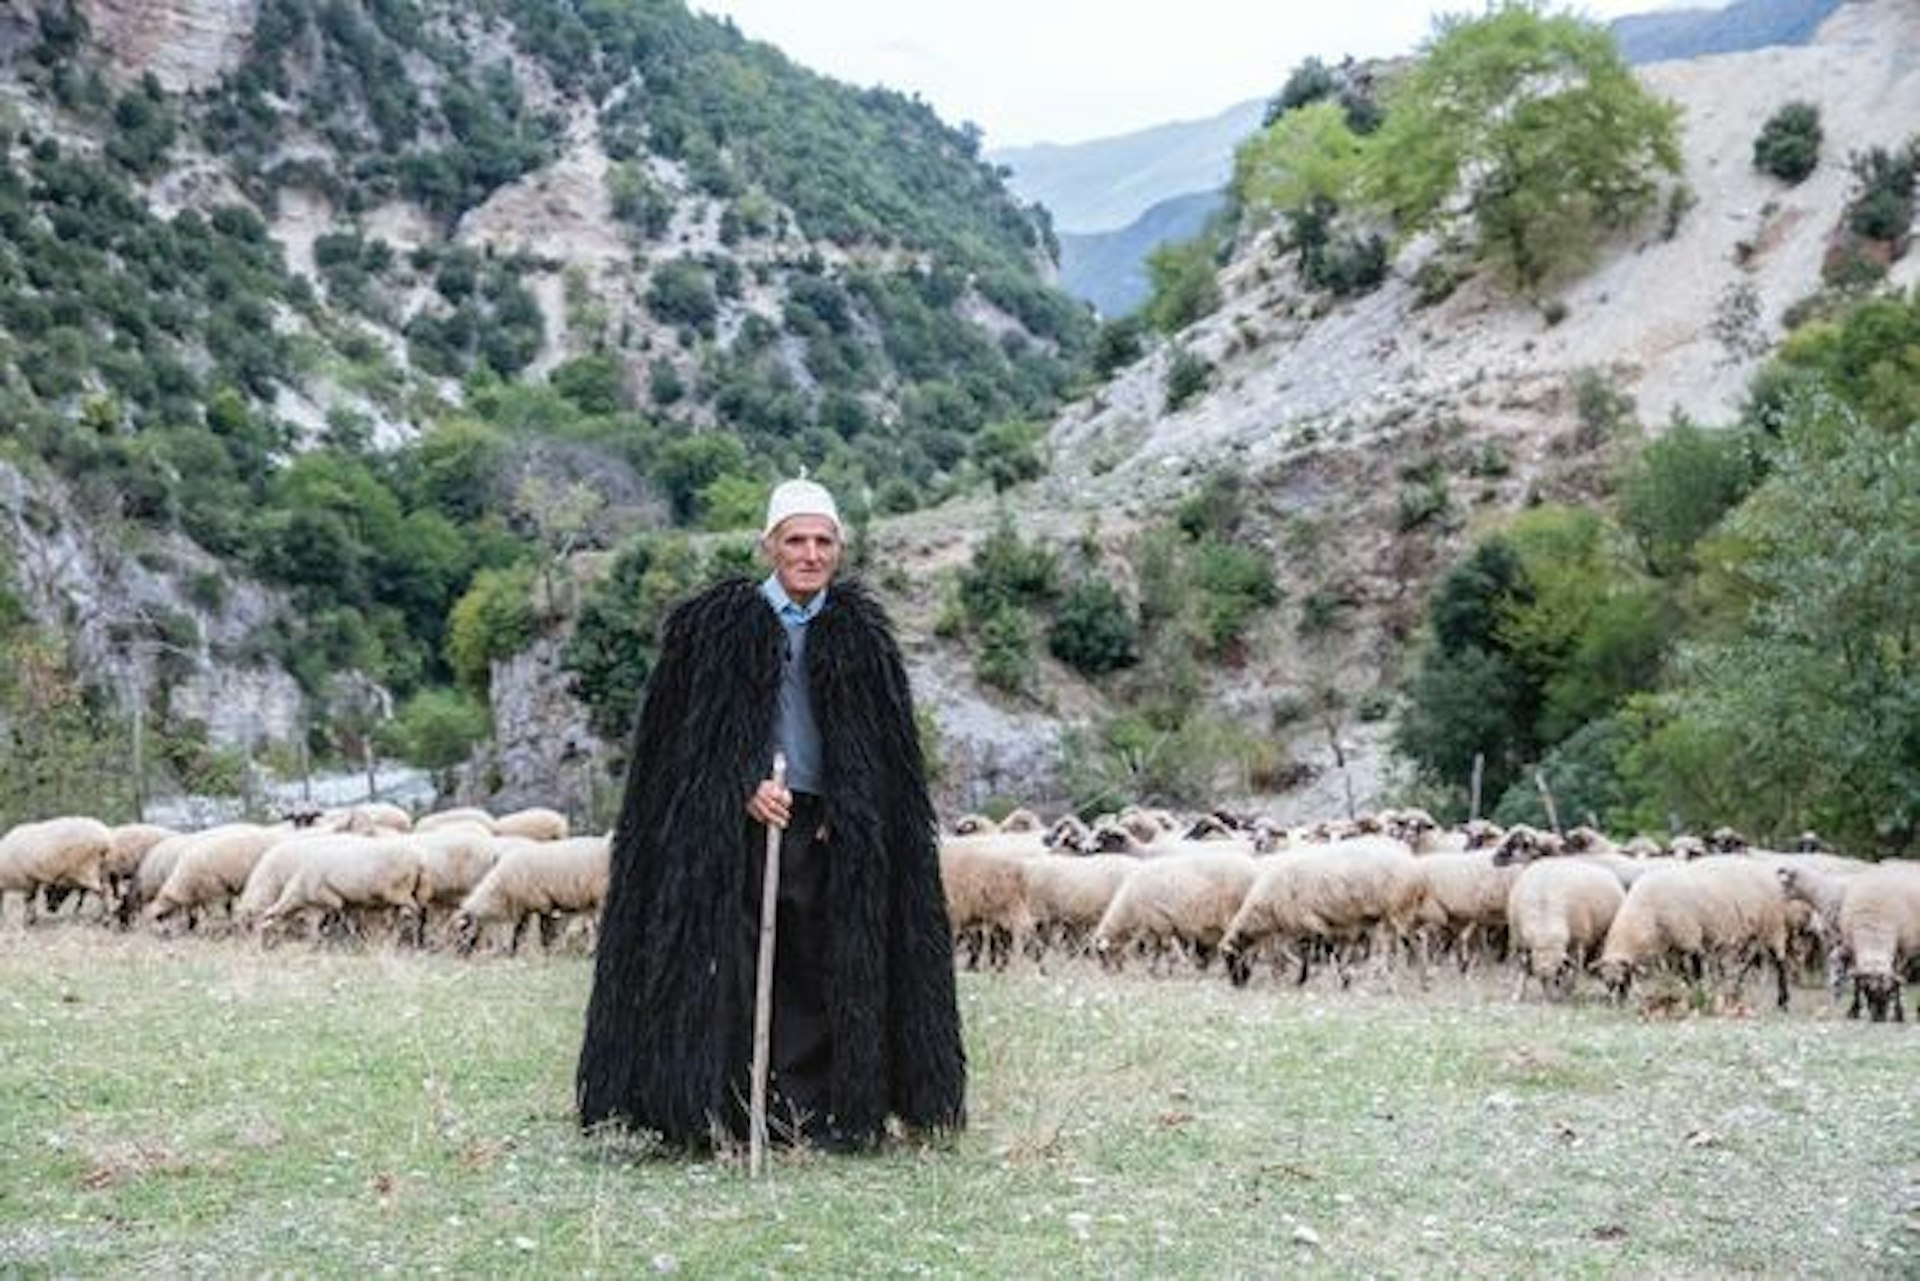 A shepherd guards his flock near the Bënçë River in Albania.